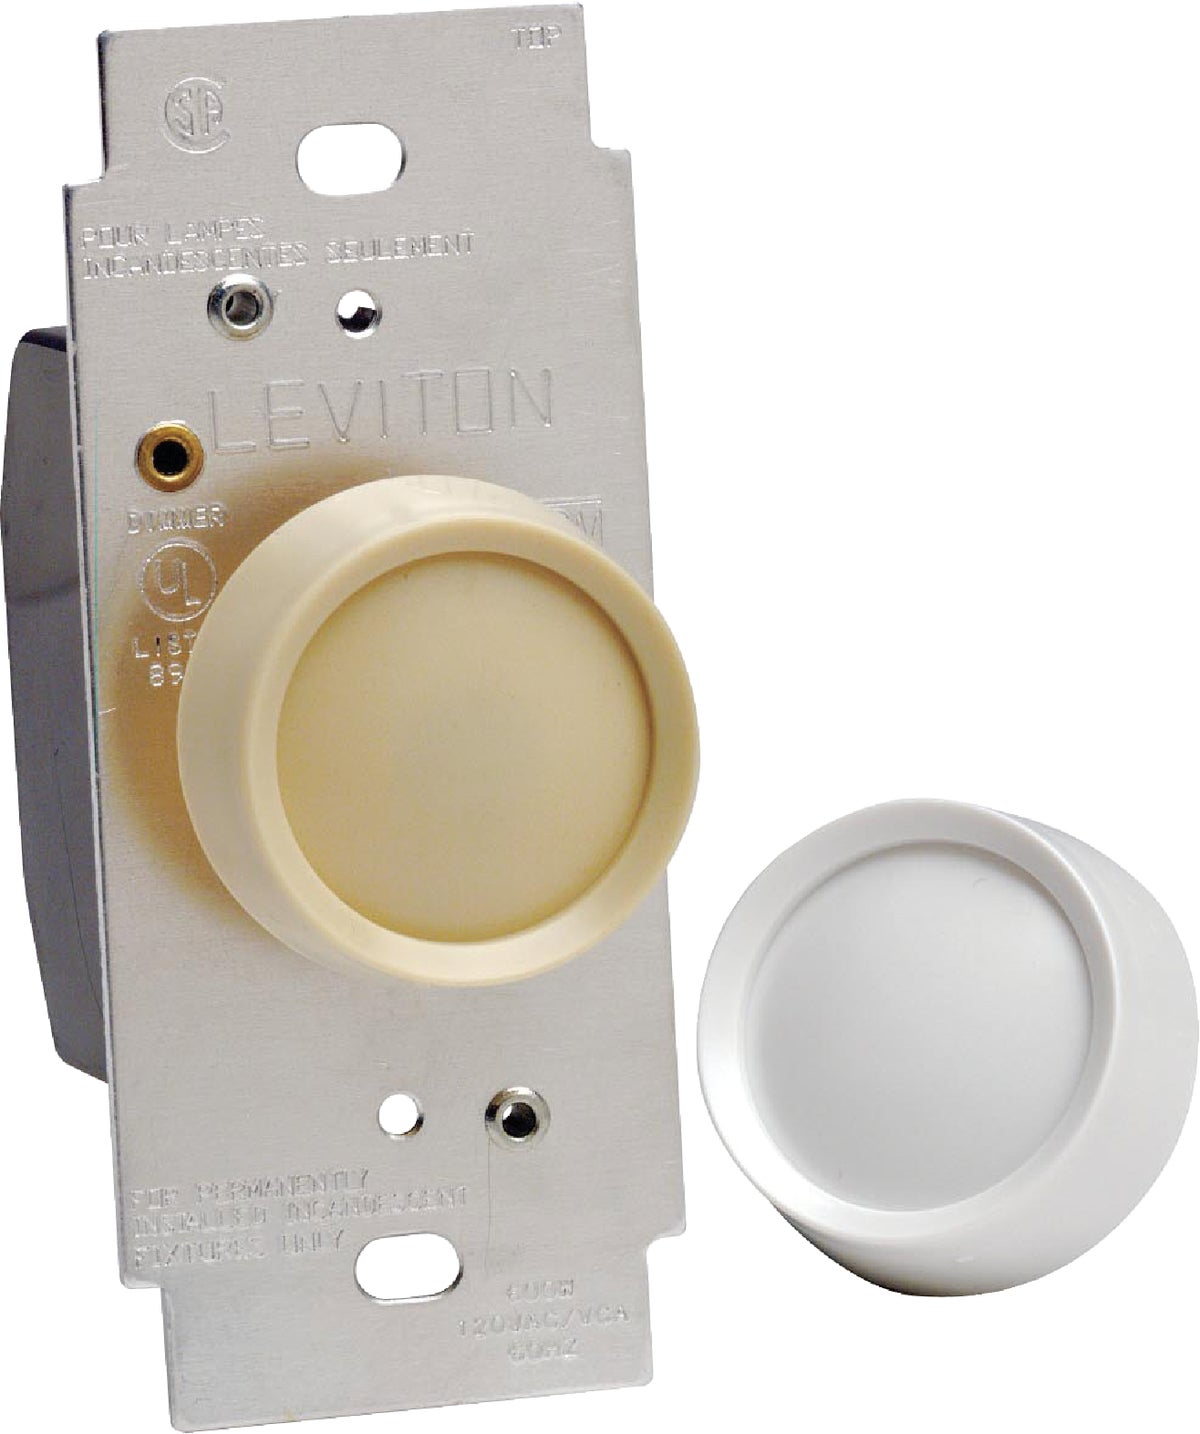 Buy Leviton Universal Push On Off Rotary Dimmer Switch Whitelight Almond